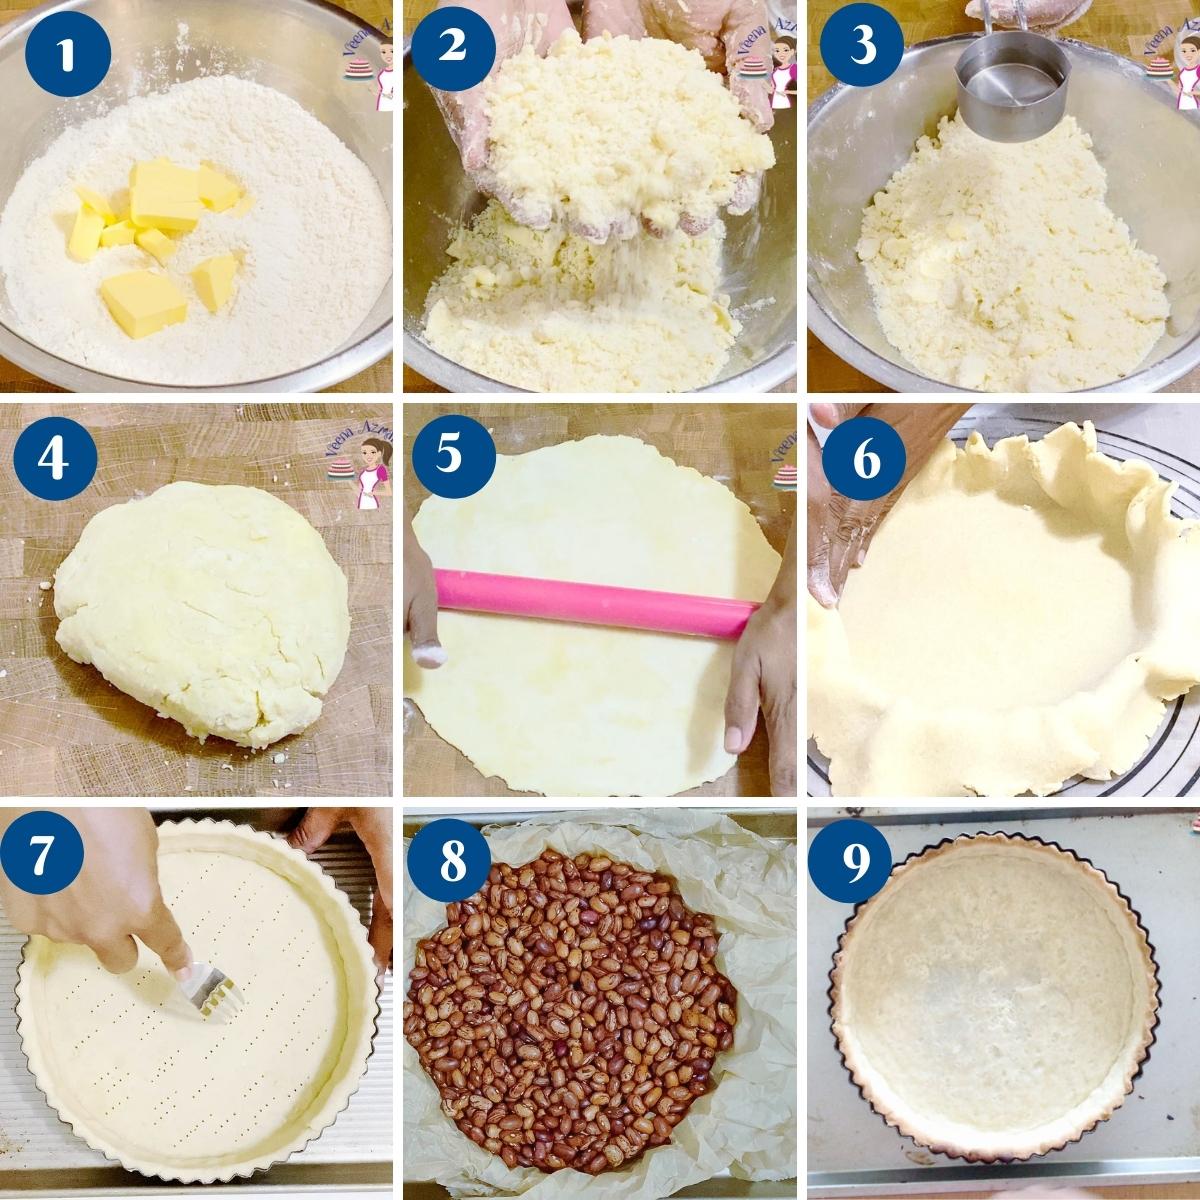 Progress pictures making the tart crust.